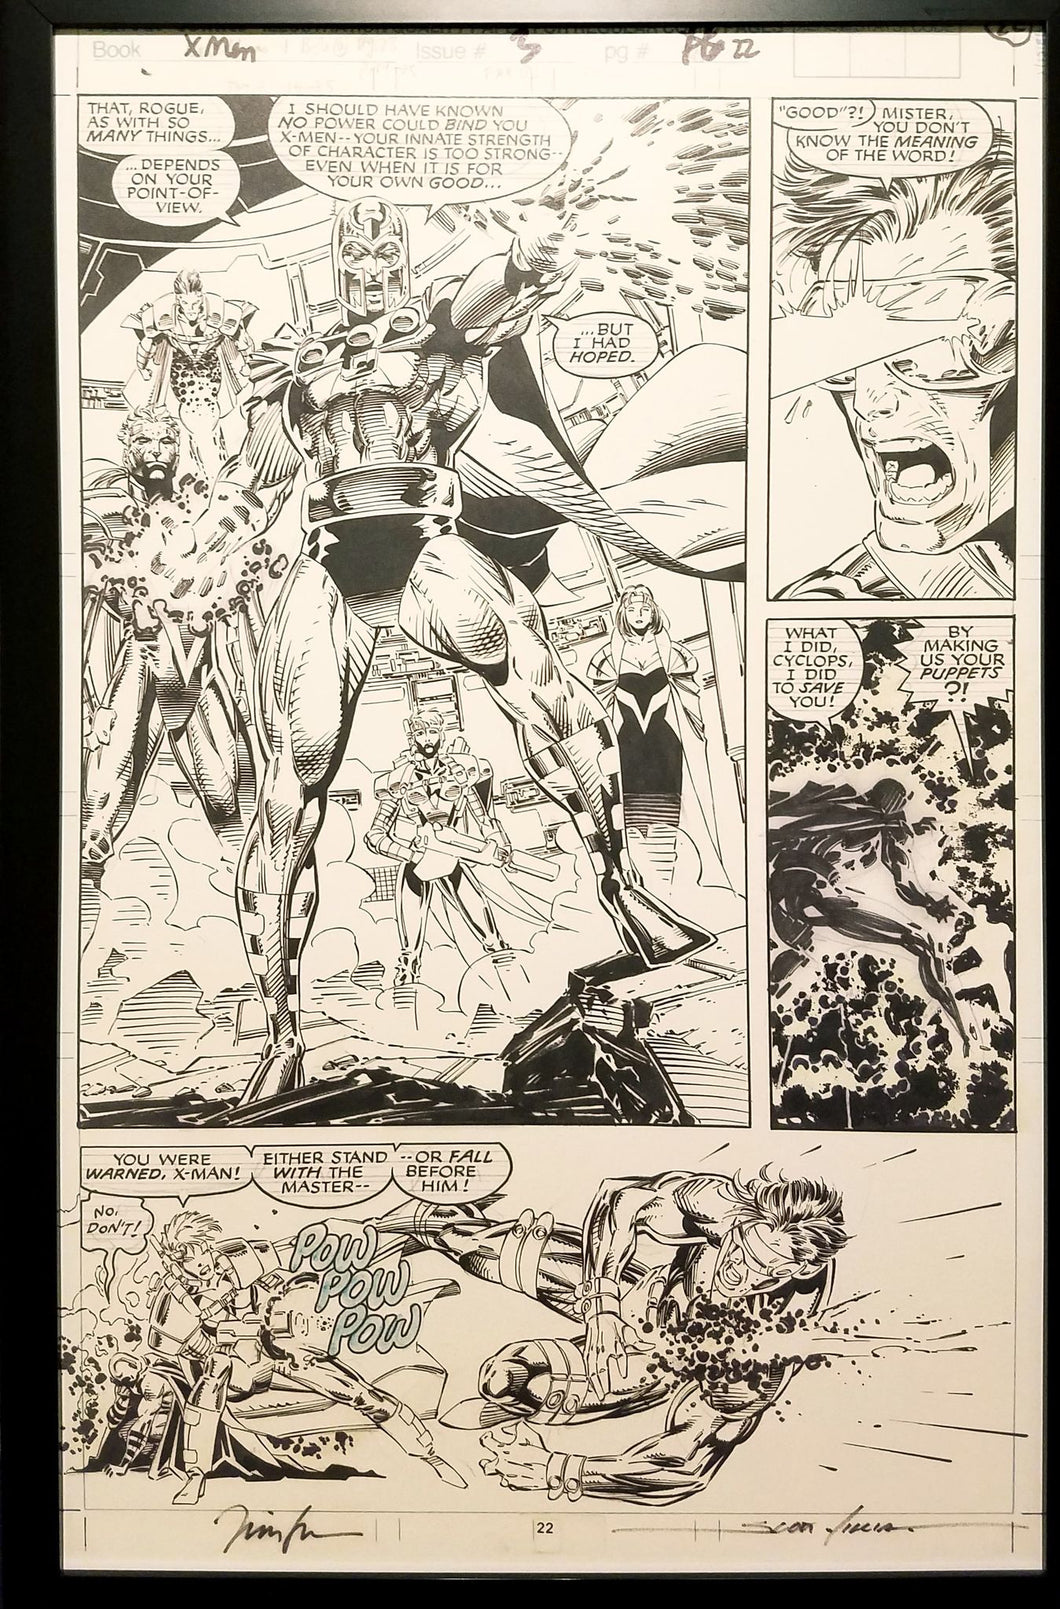 X-Men #3 pg. 22 Magneto Jim Lee 11x17 FRAMED Original Art Poster Marvel Comics